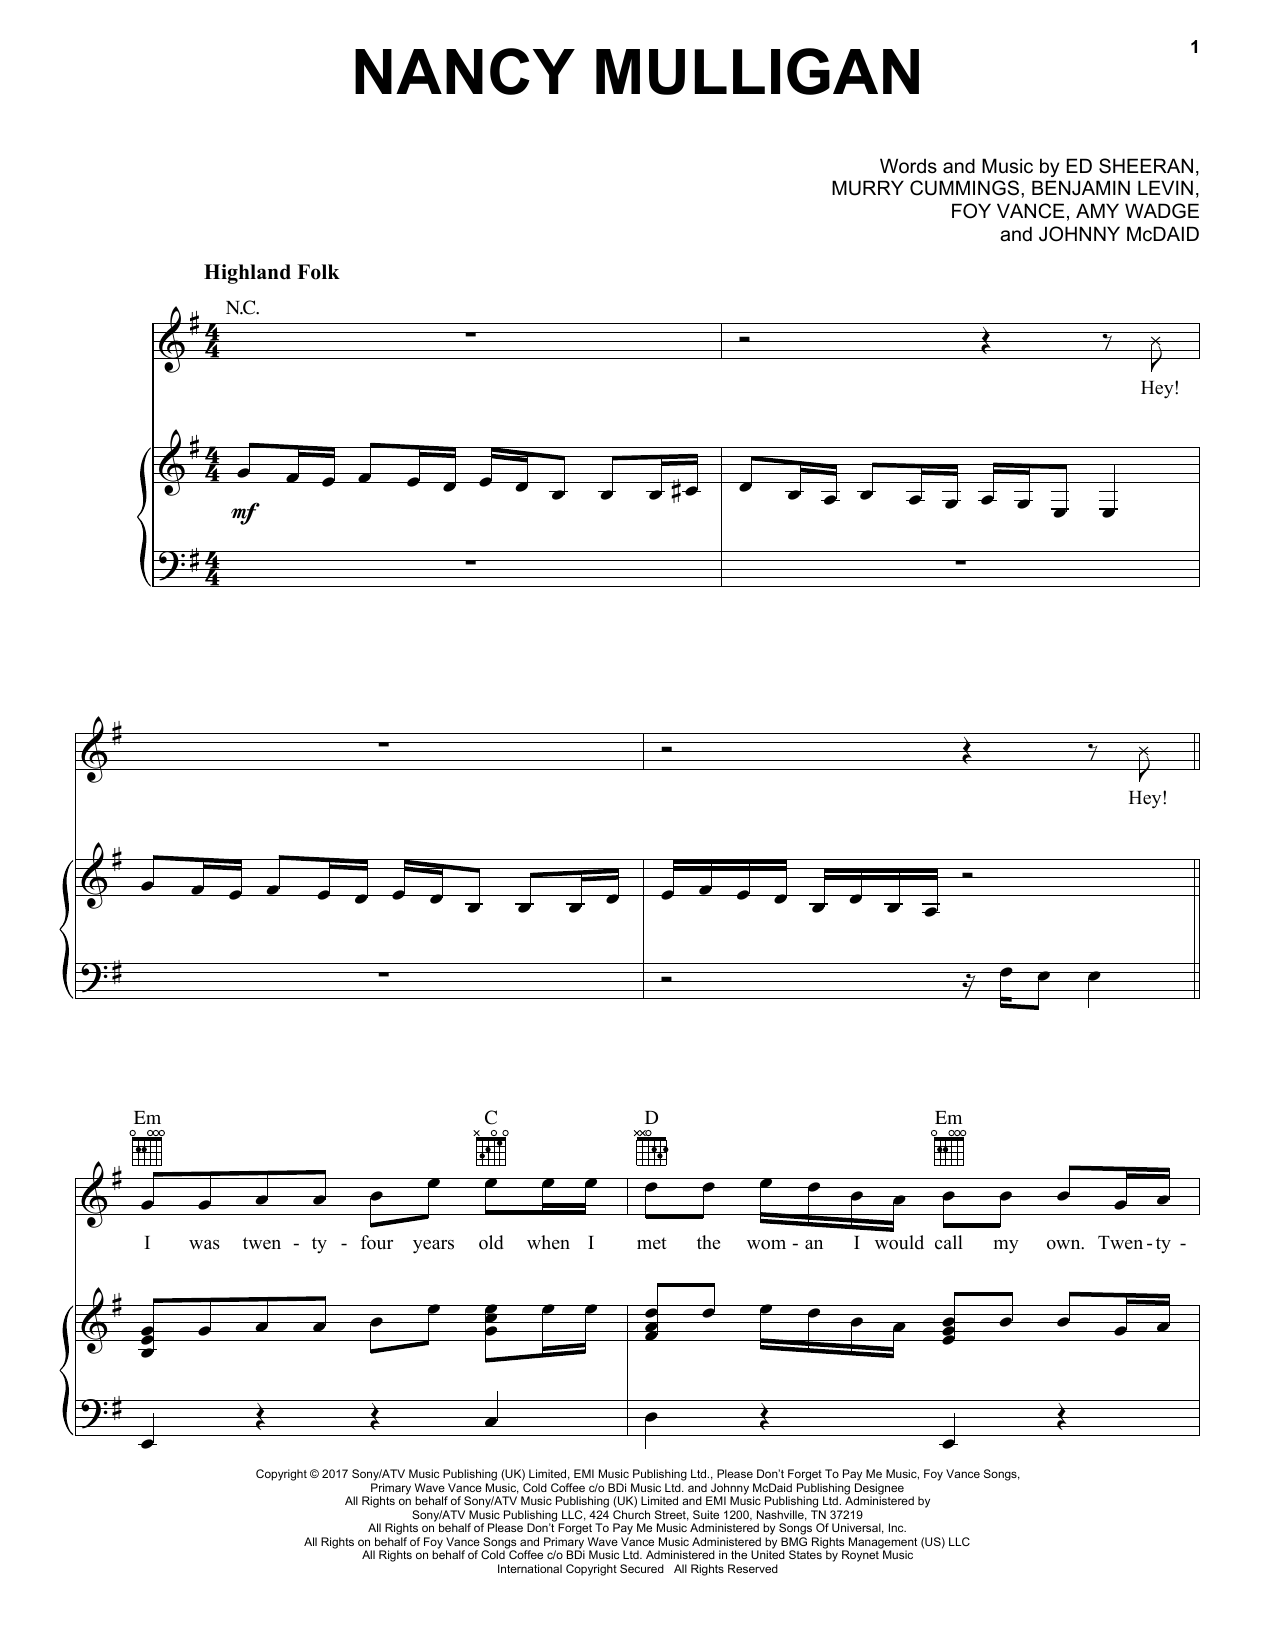 Download Ed Sheeran Nancy Mulligan Sheet Music and learn how to play Guitar Tab PDF digital score in minutes